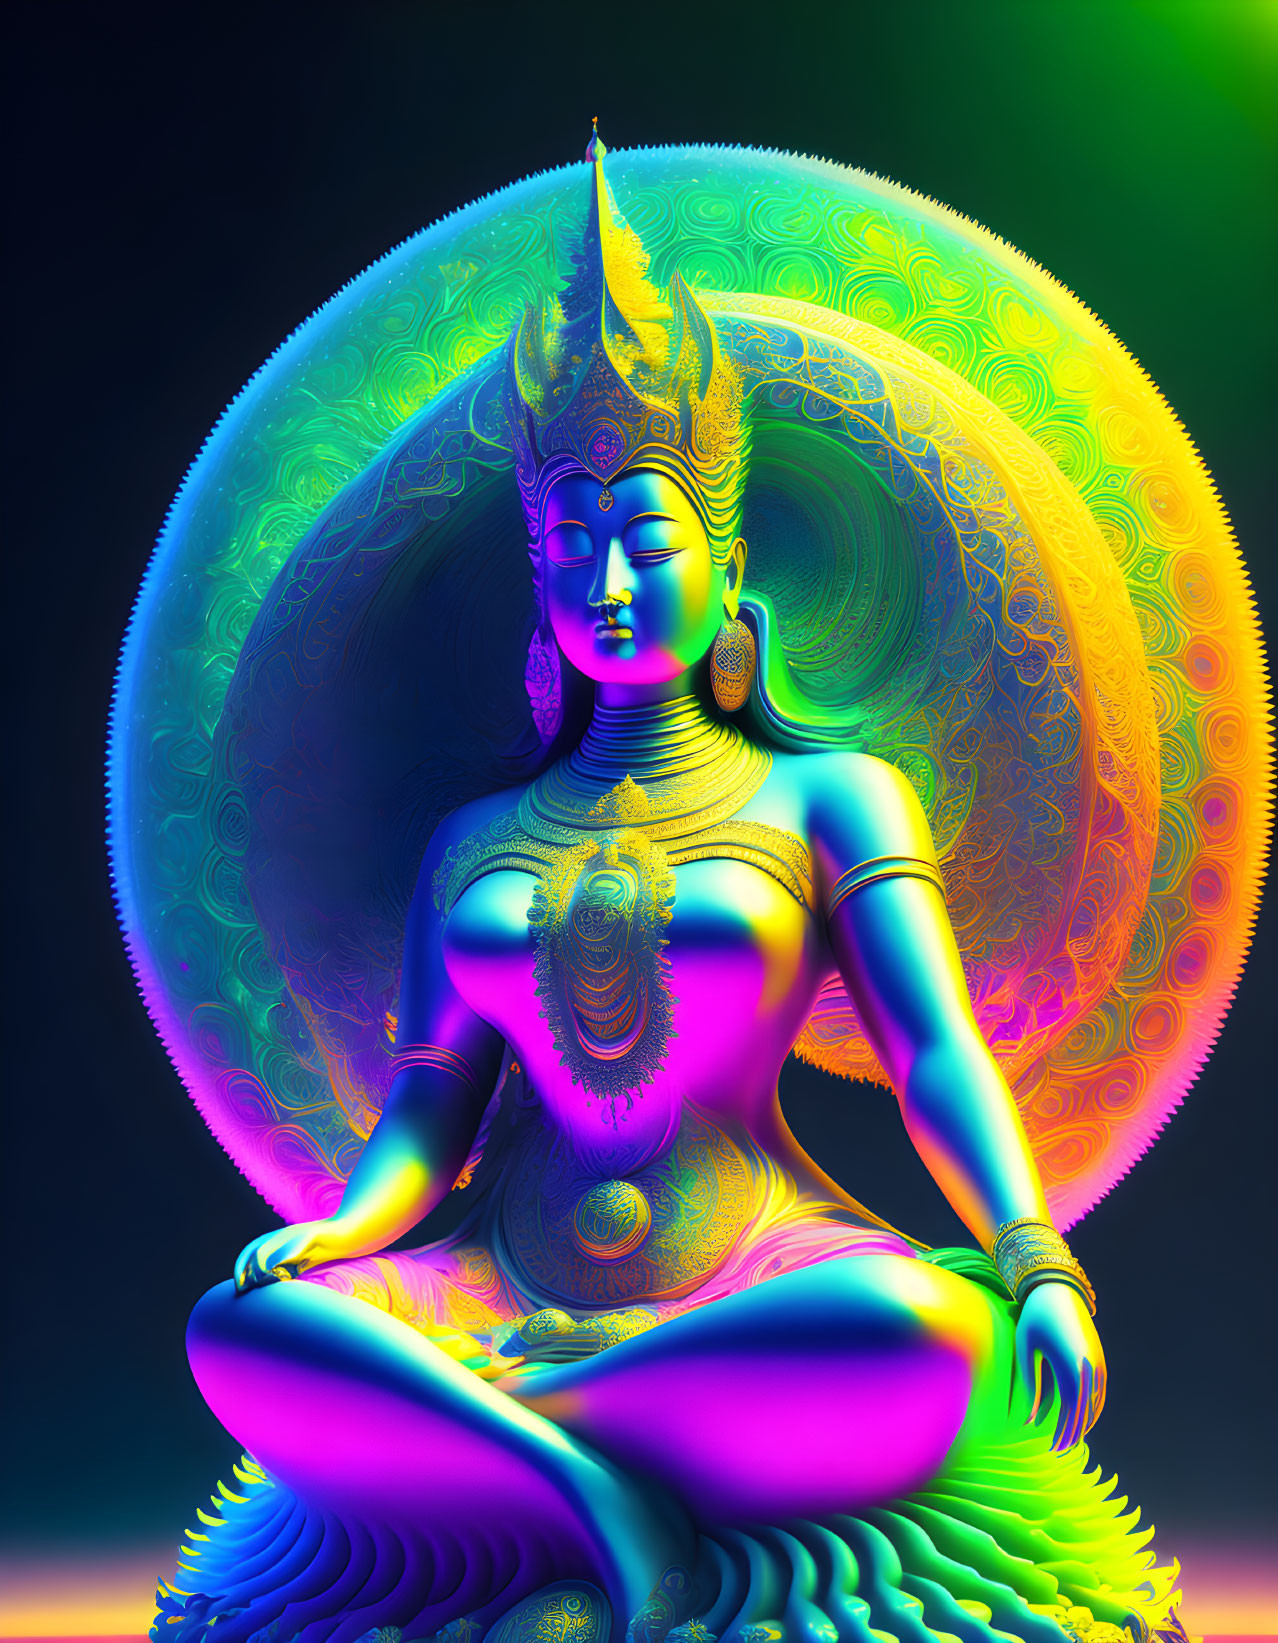 Vibrant digital artwork: Meditating figure with aura patterns, blending Buddhist deity with psychedelic art